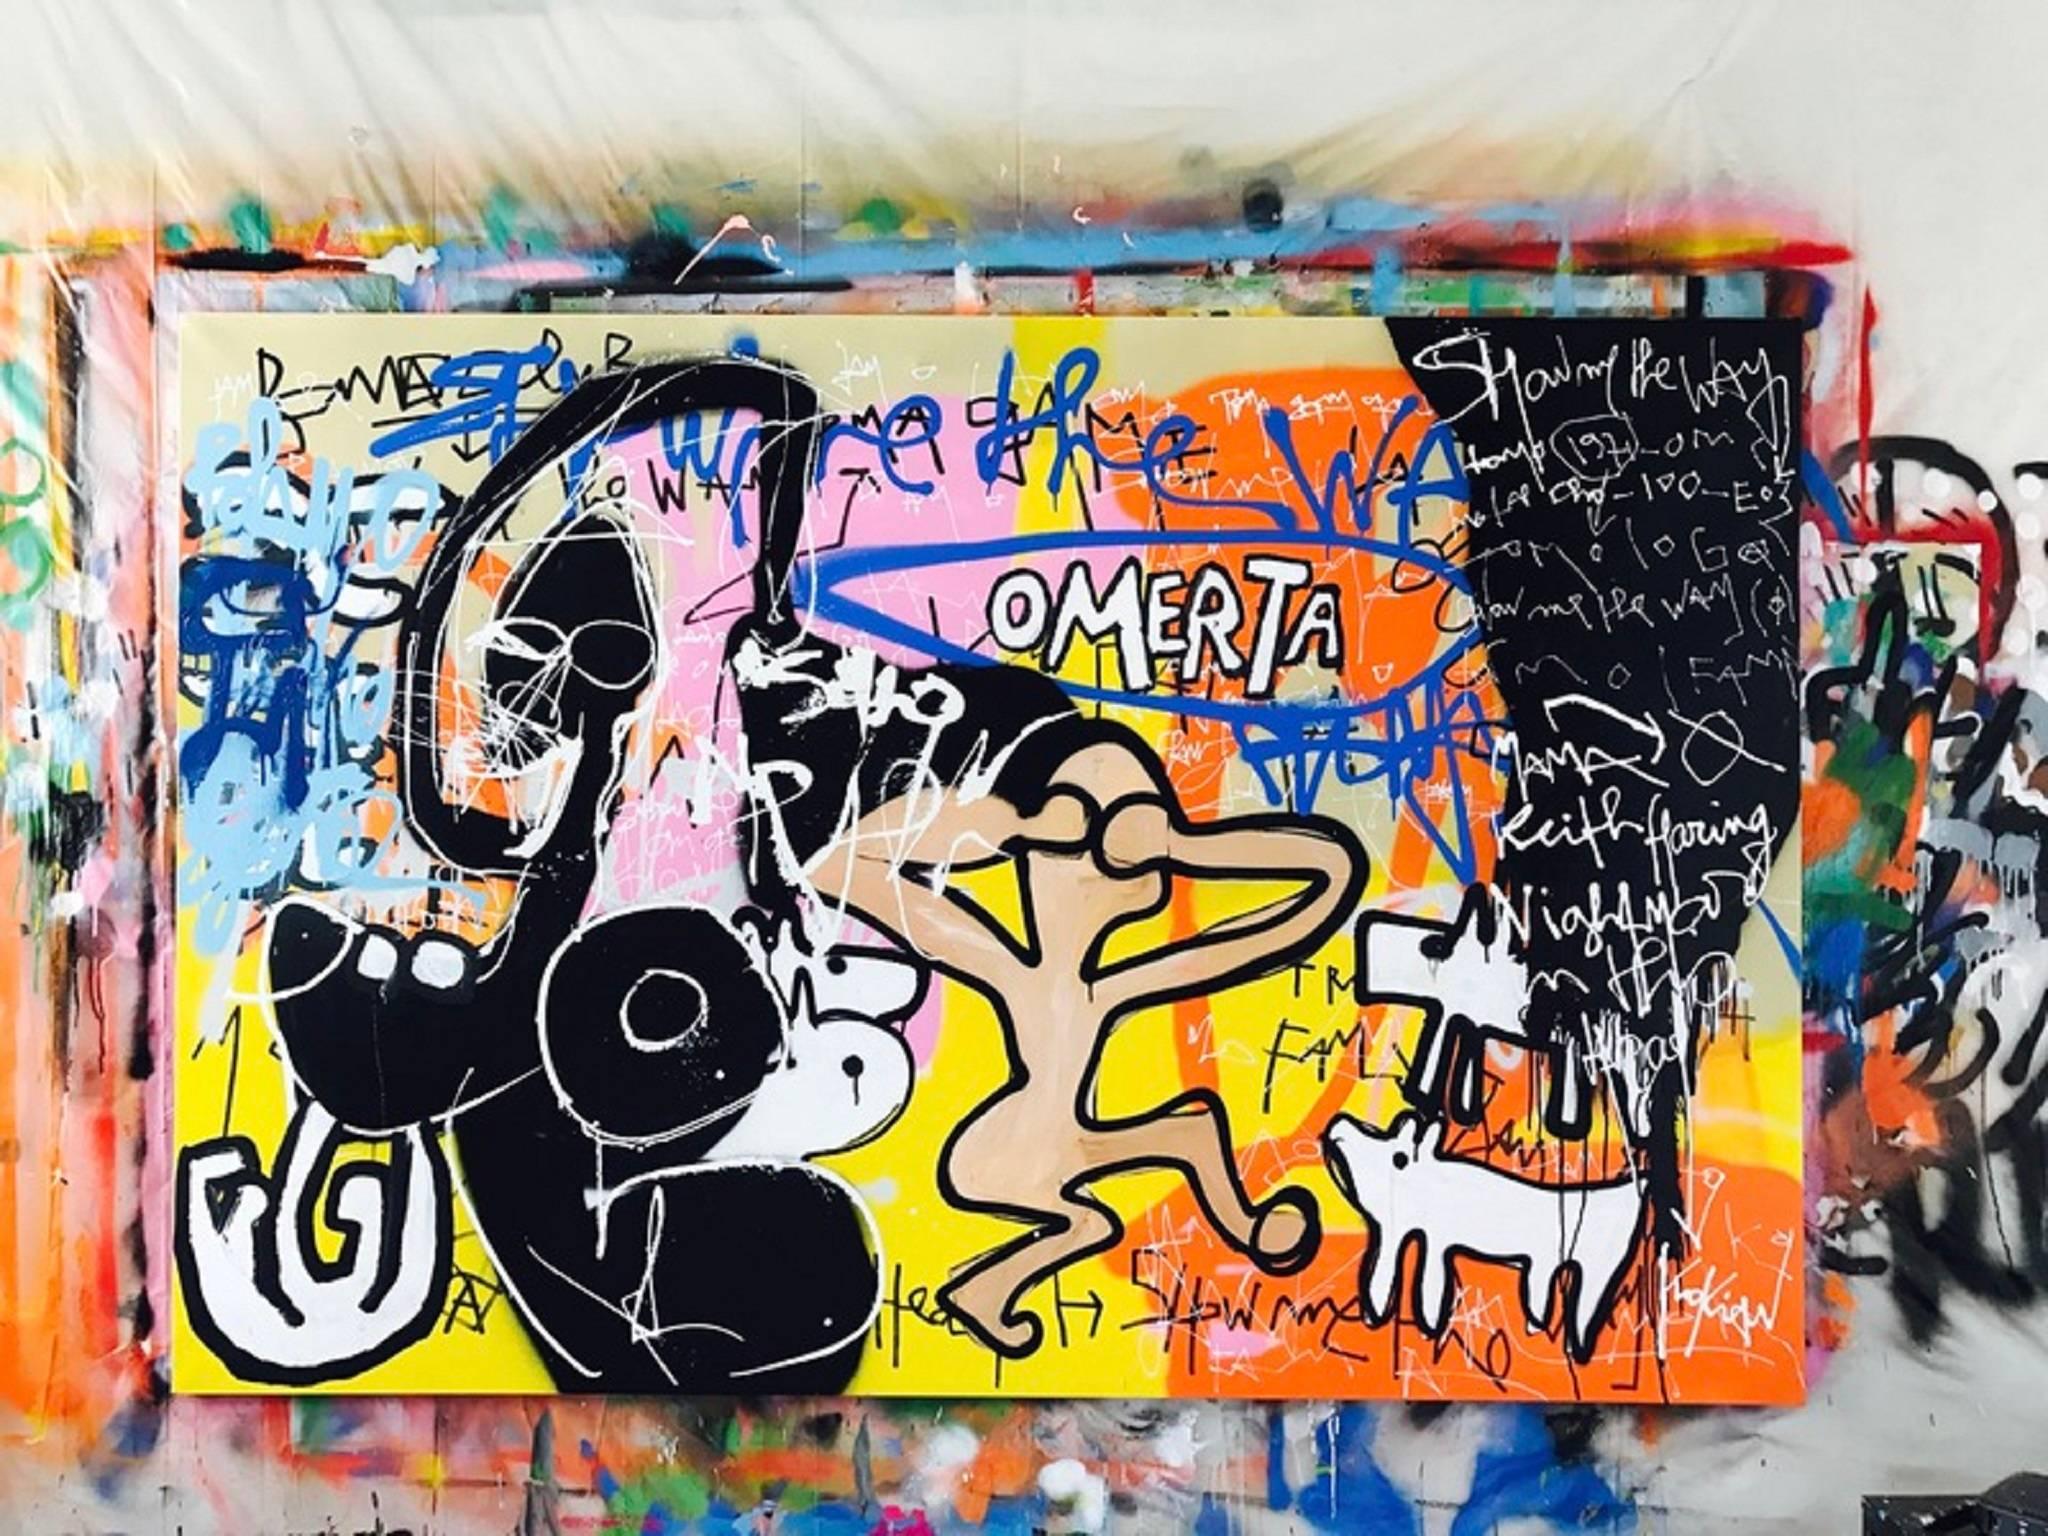 Keith Haring Dreala Day (Omerta) - Painting by Kokian